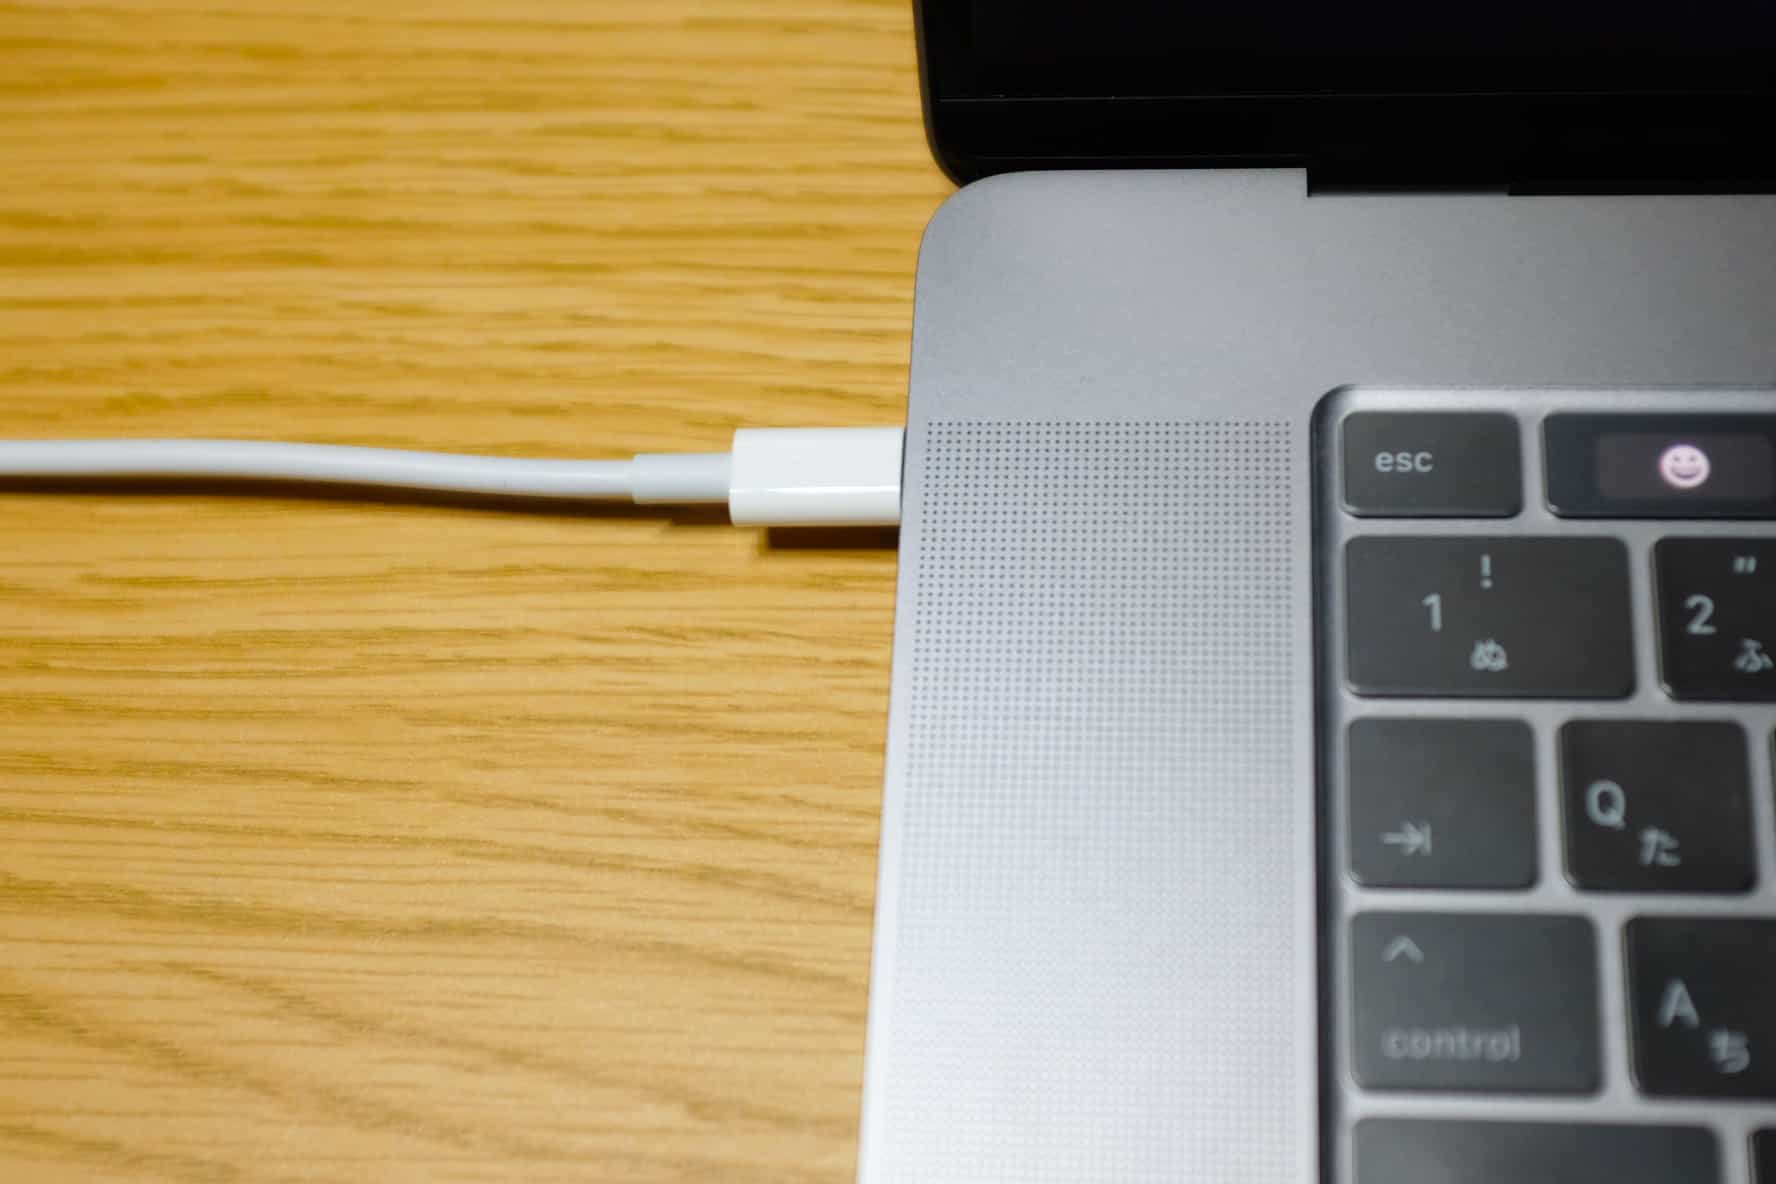 MacBookは充電しながら使う派？充電しながら使わない派？？